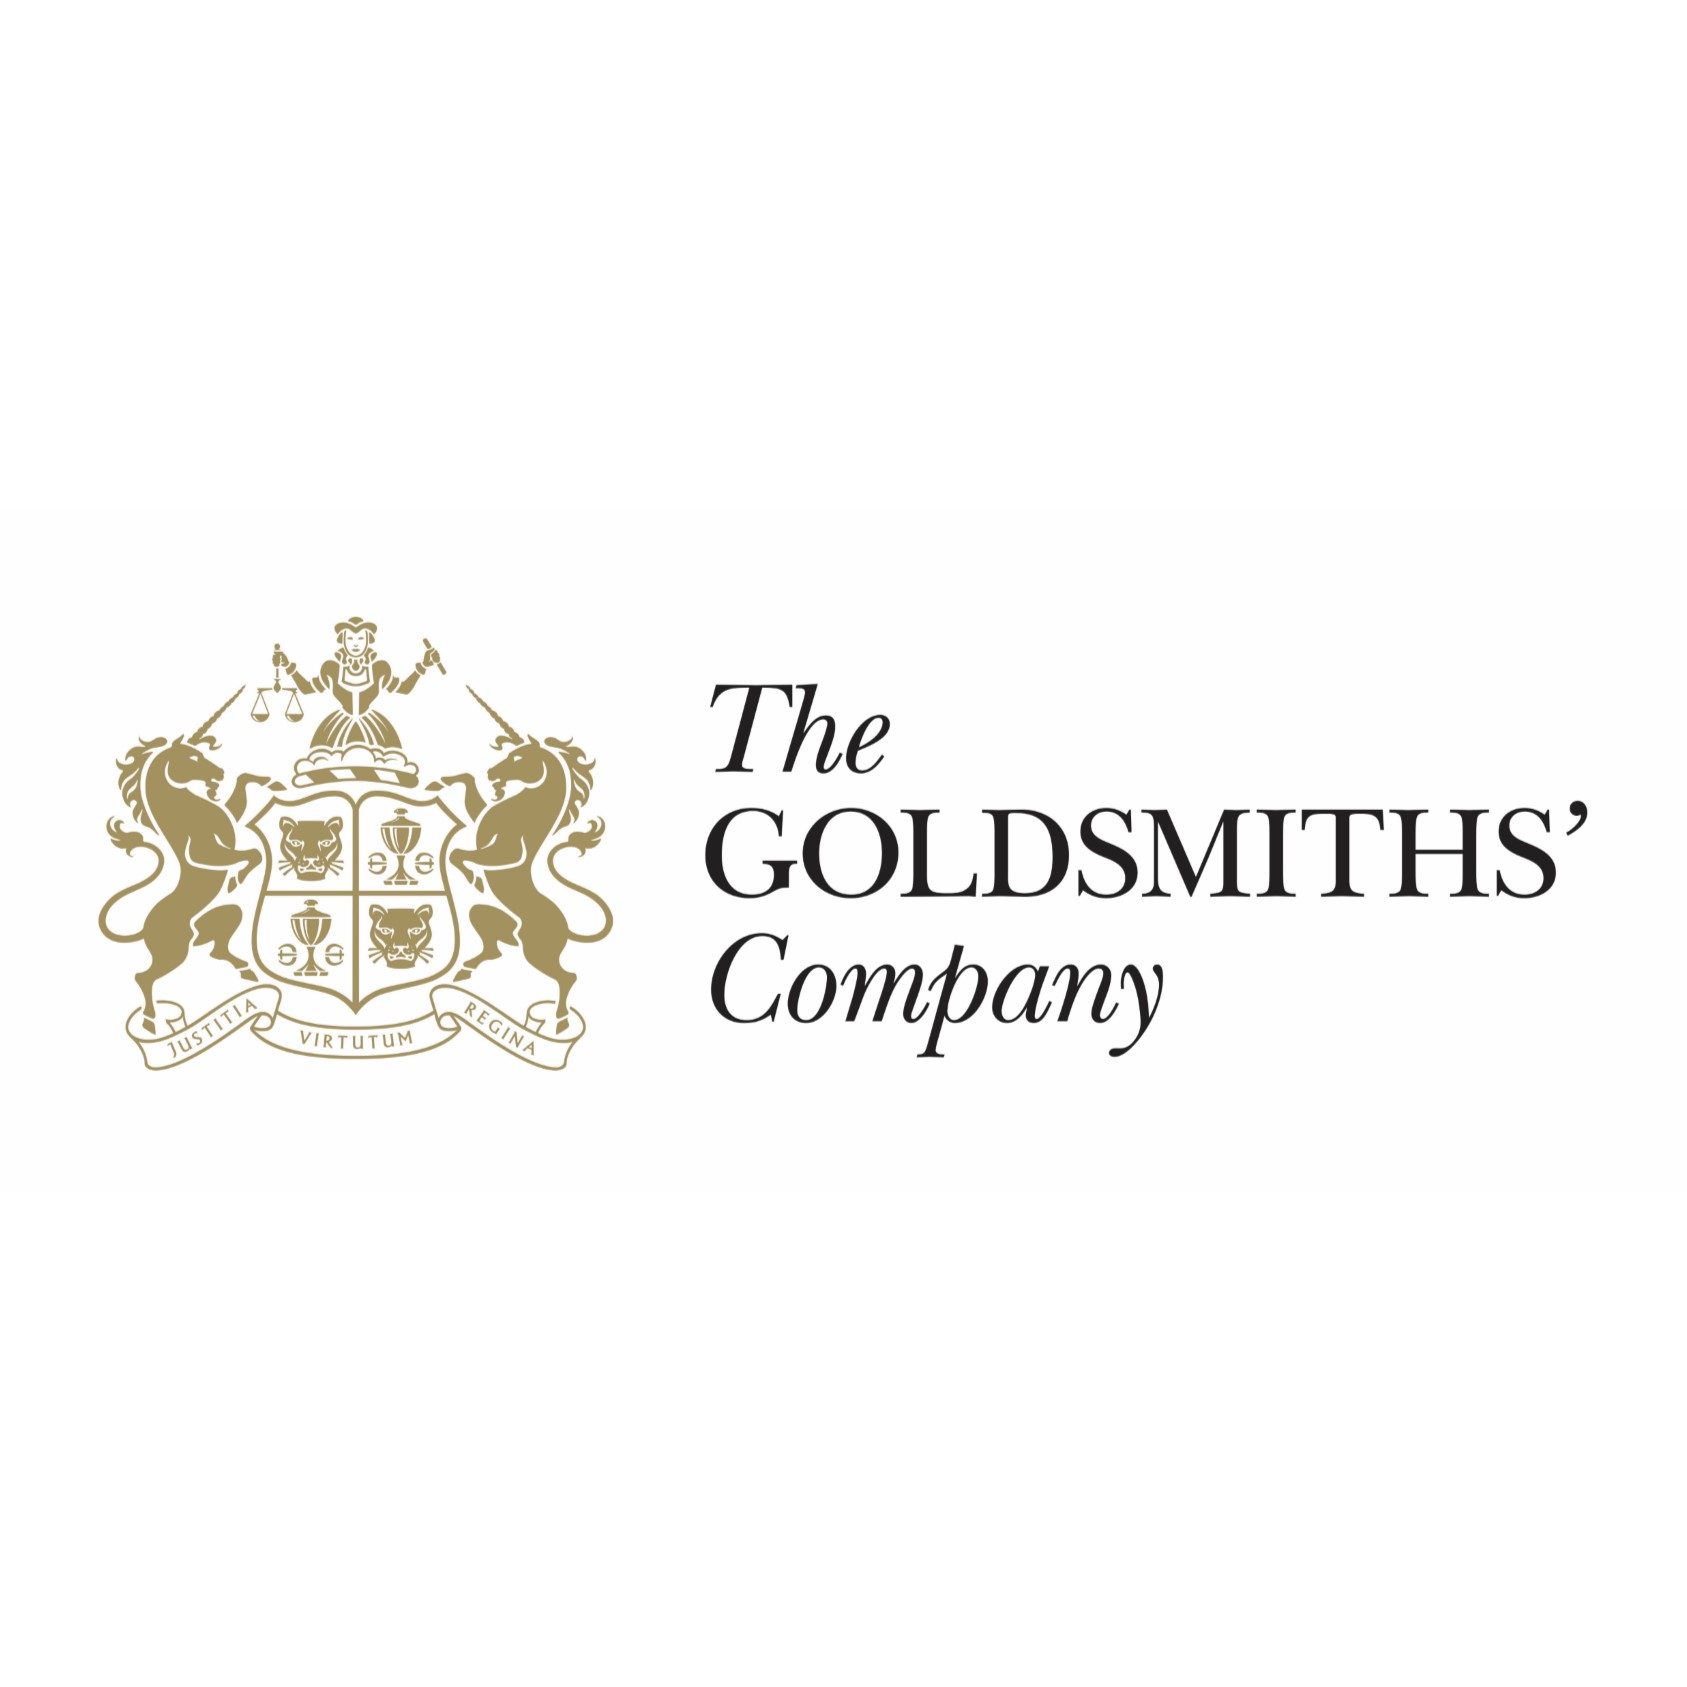 The Goldsmiths’ Company